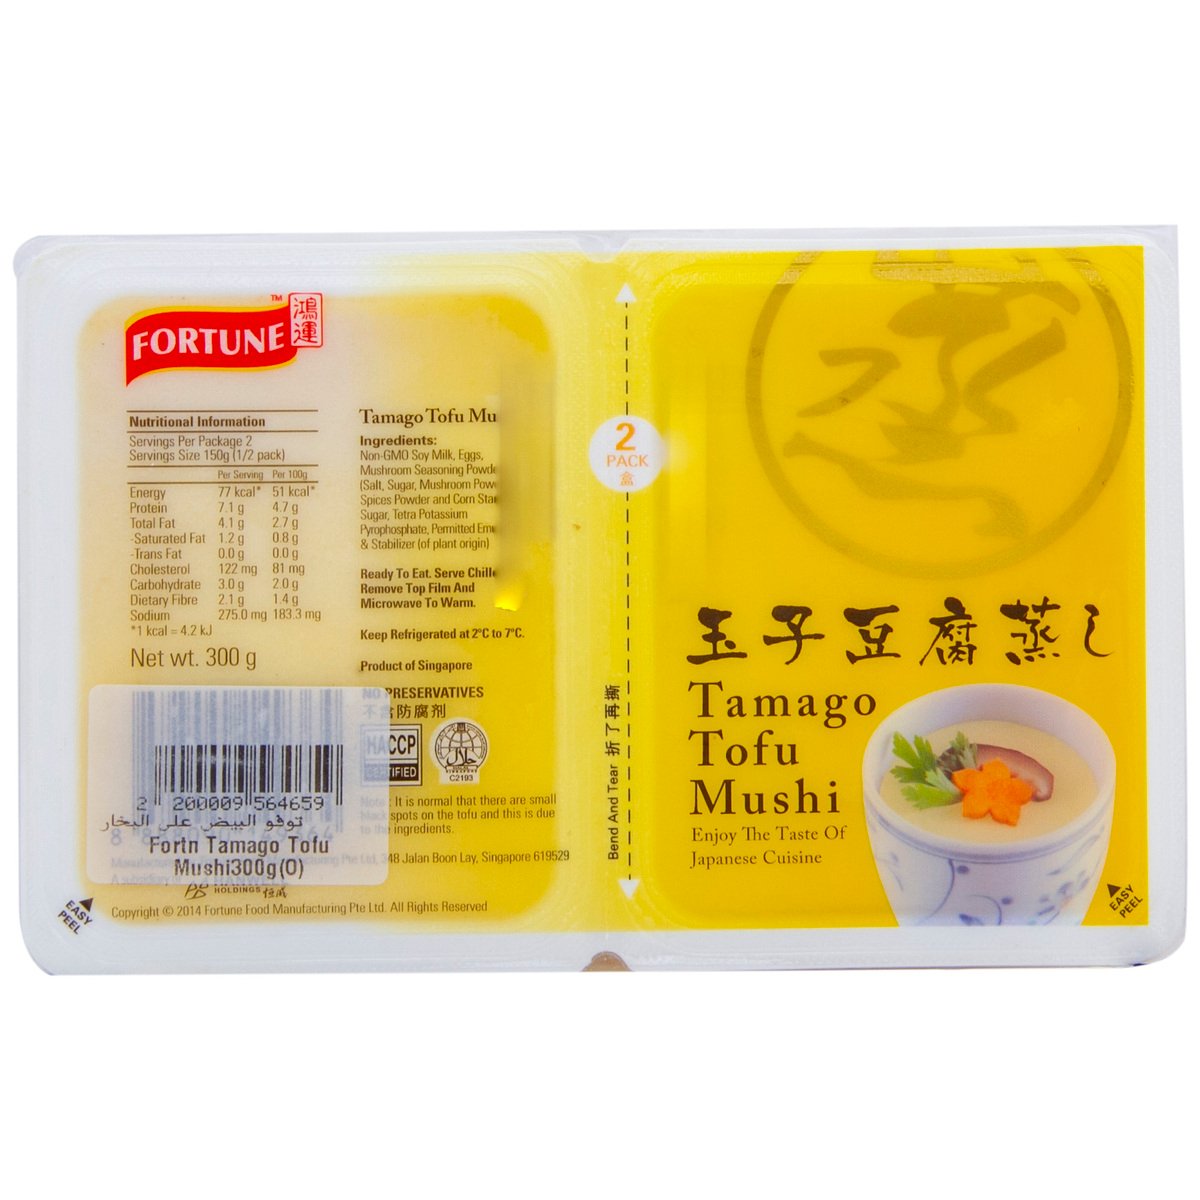 Fortune Tamago Tofu Mushi 300 g